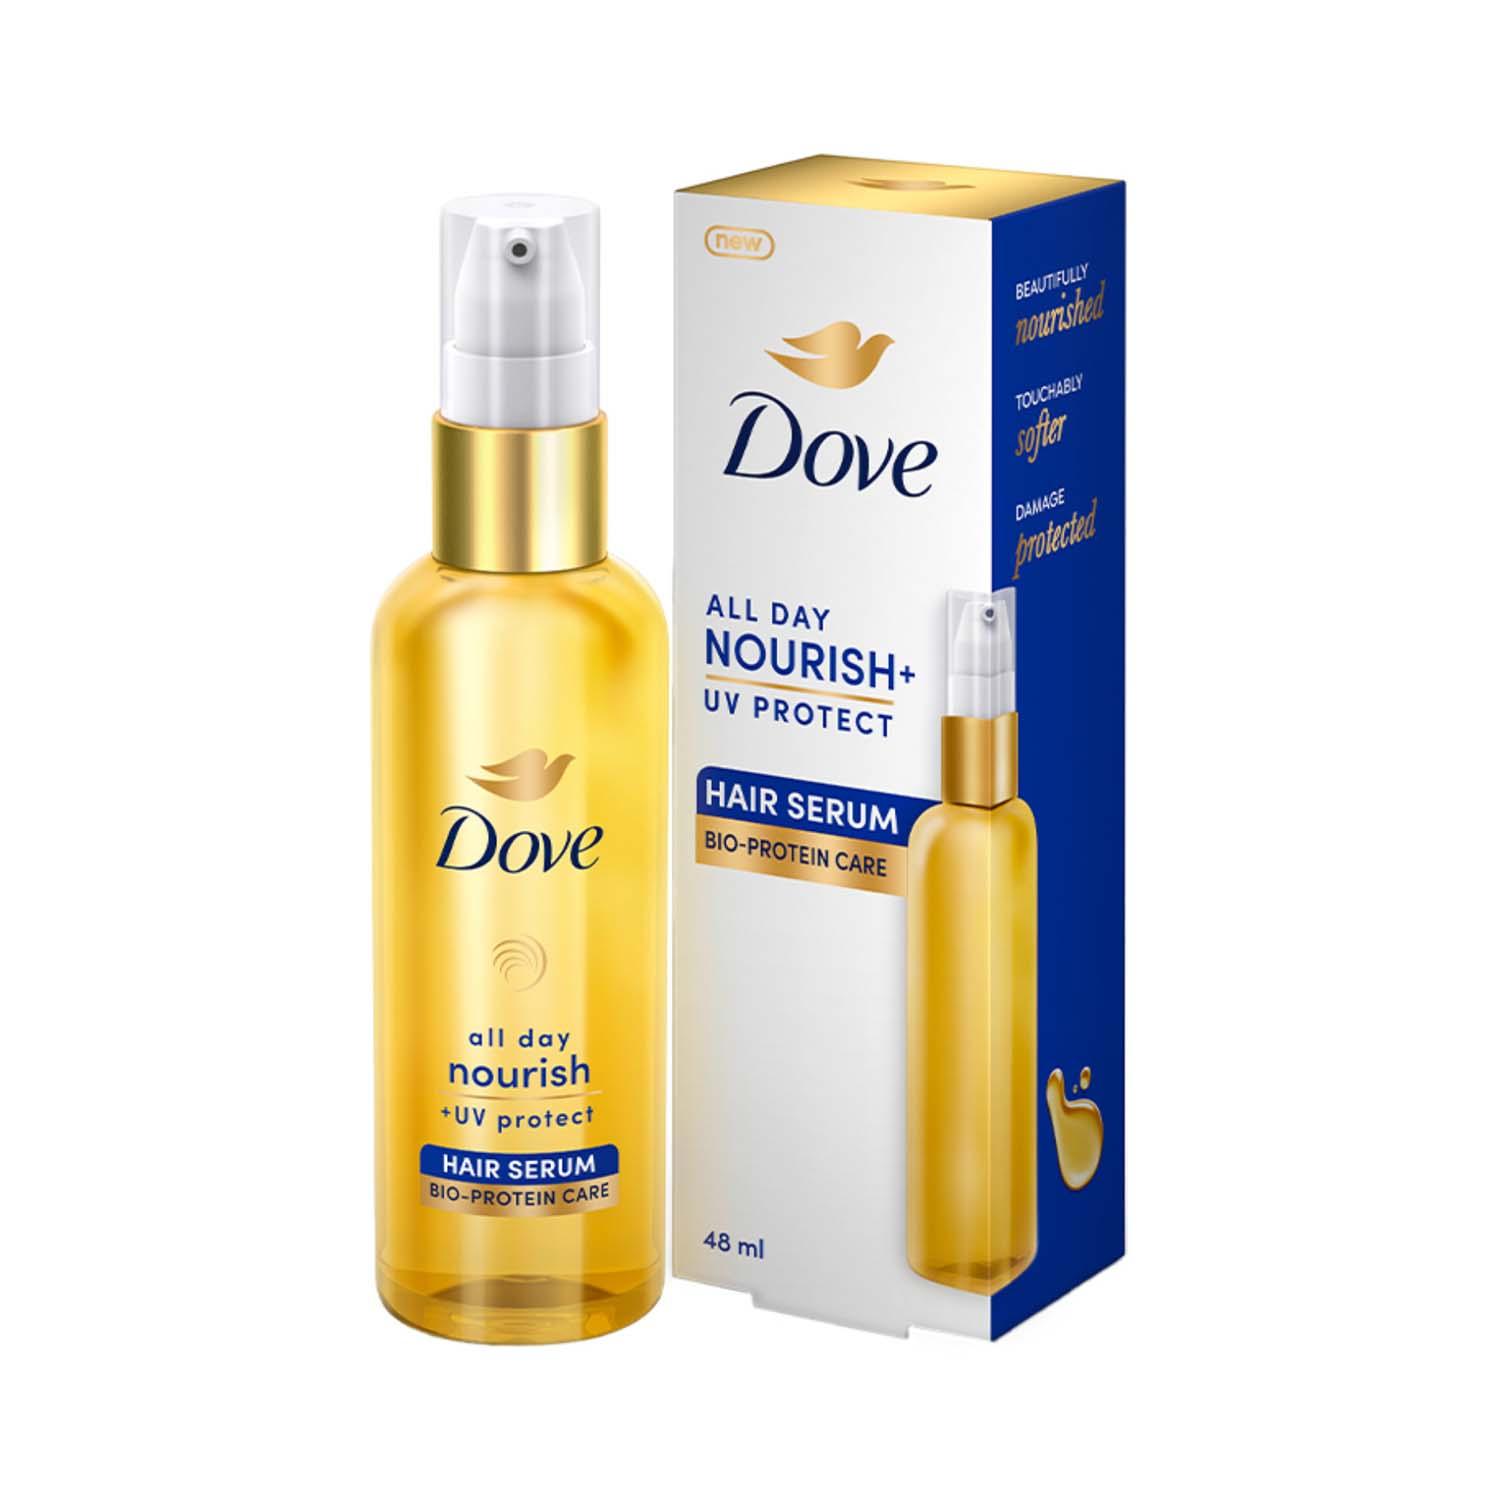 Dove | Dove All Day Nourish + UV Protect Hair Serum (48 ml)